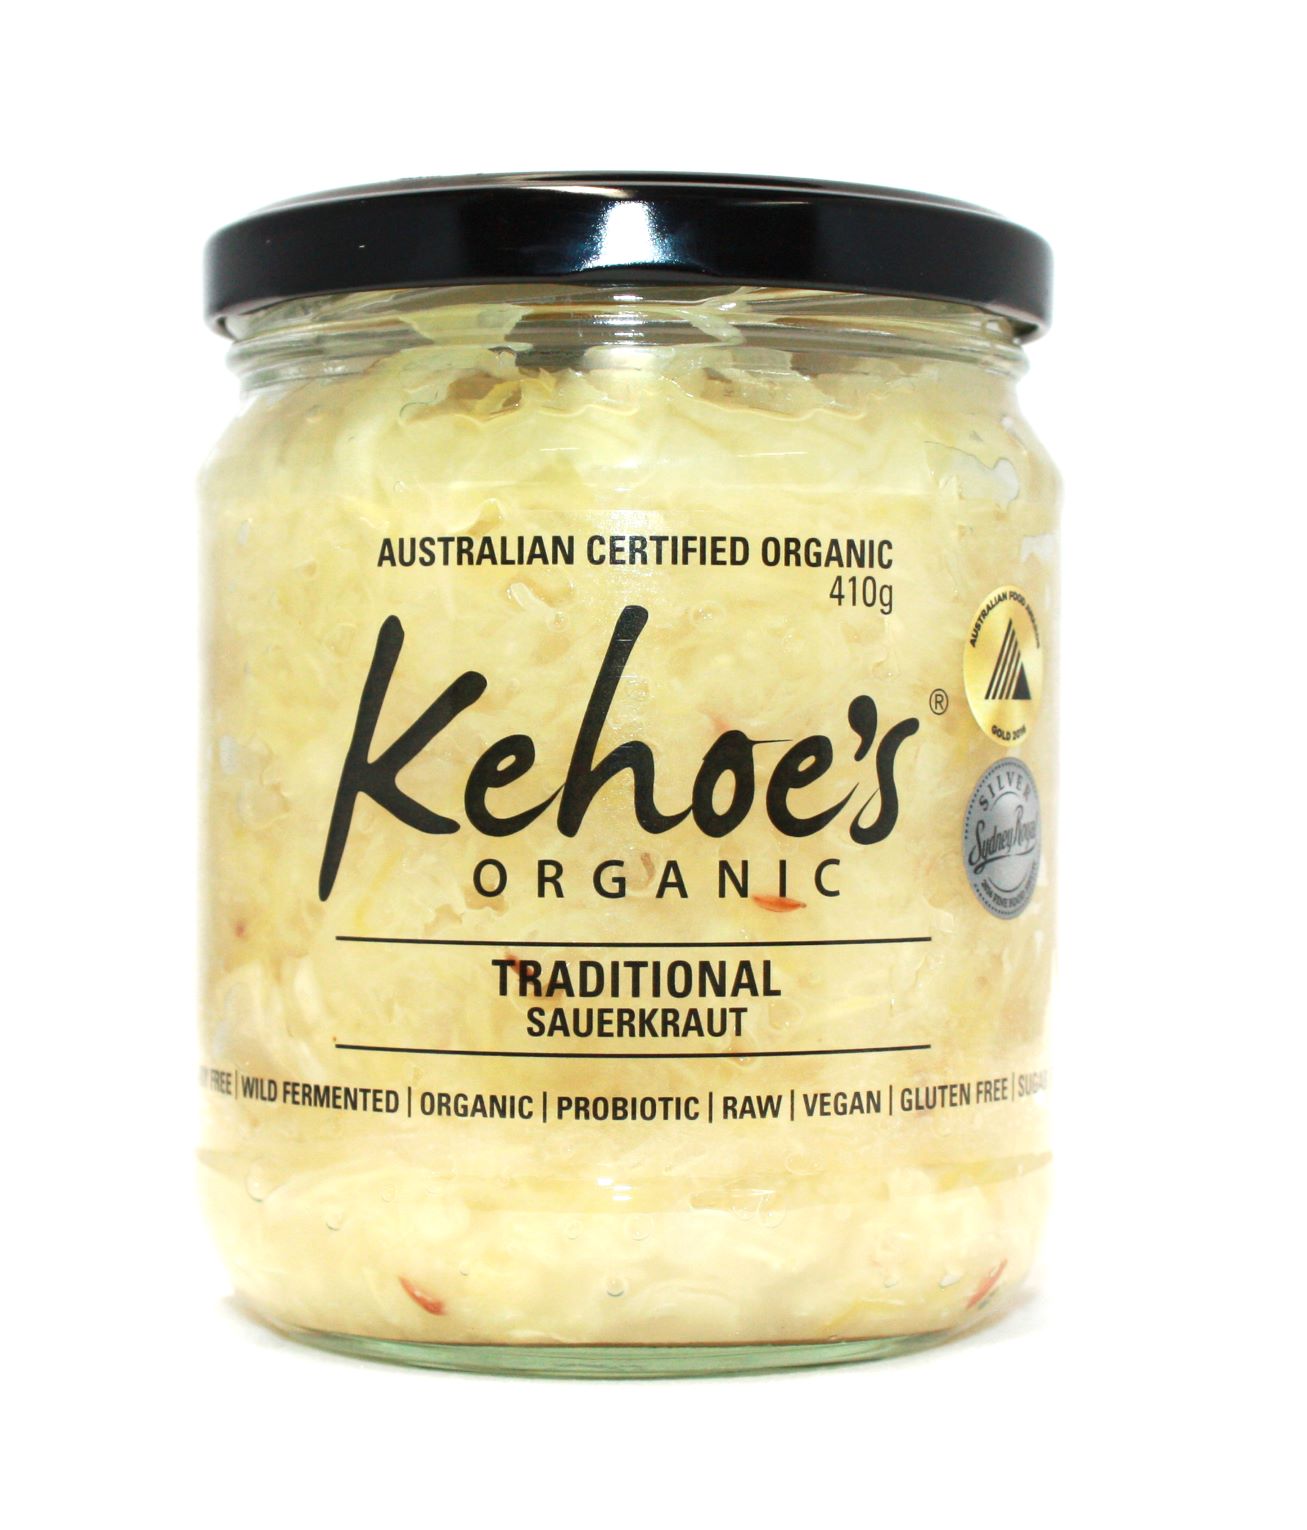 Kehoes Traditional Sauerkraut